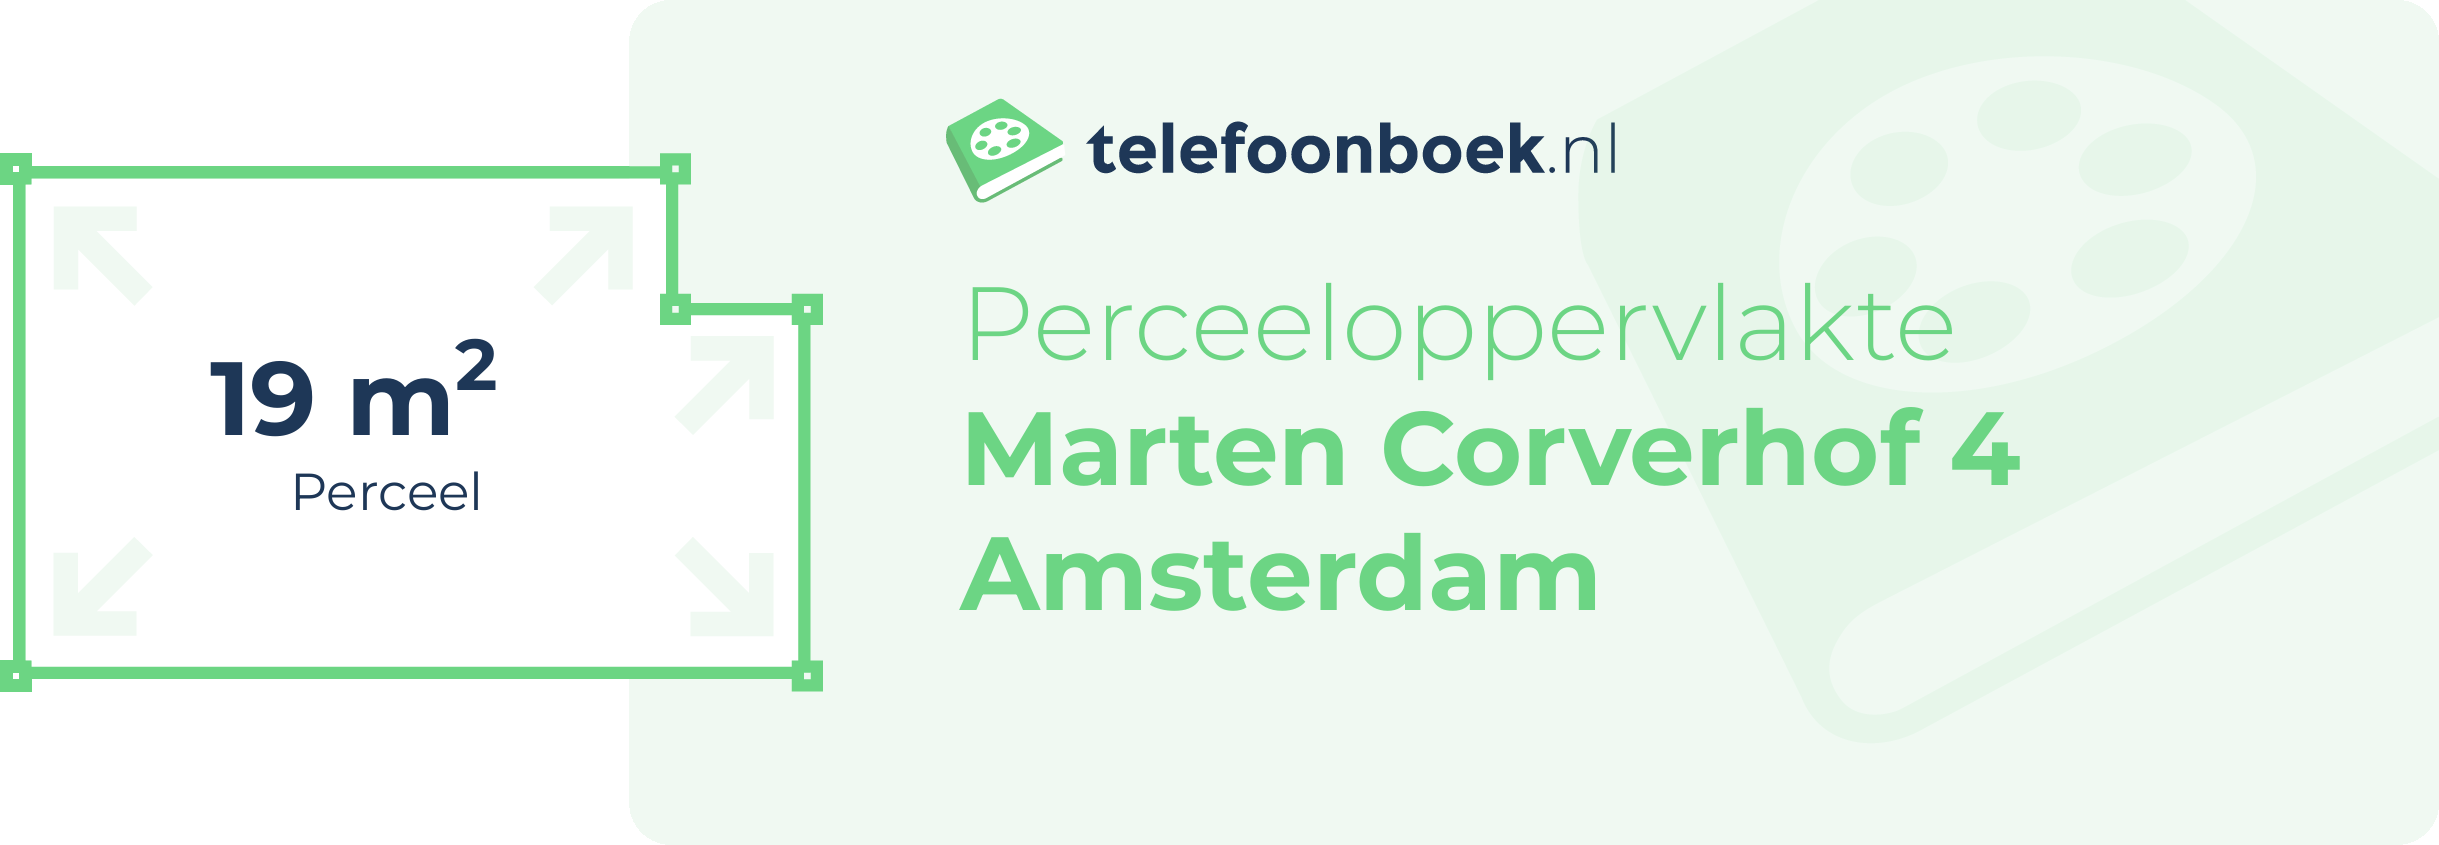 Perceeloppervlakte Marten Corverhof 4 Amsterdam